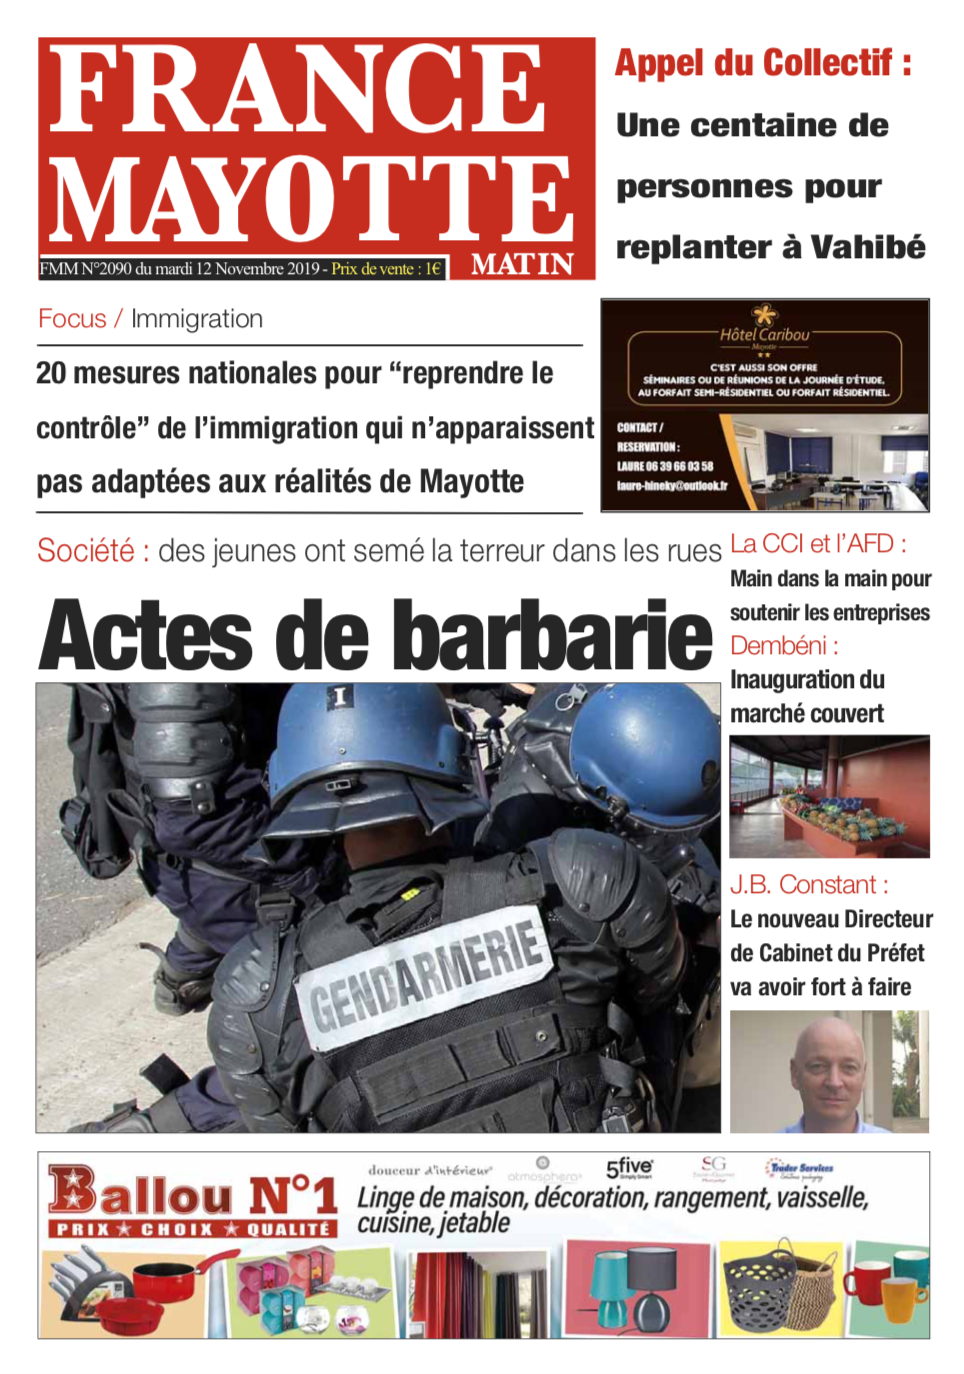 France Mayotte Mardi 12 novembre 2019